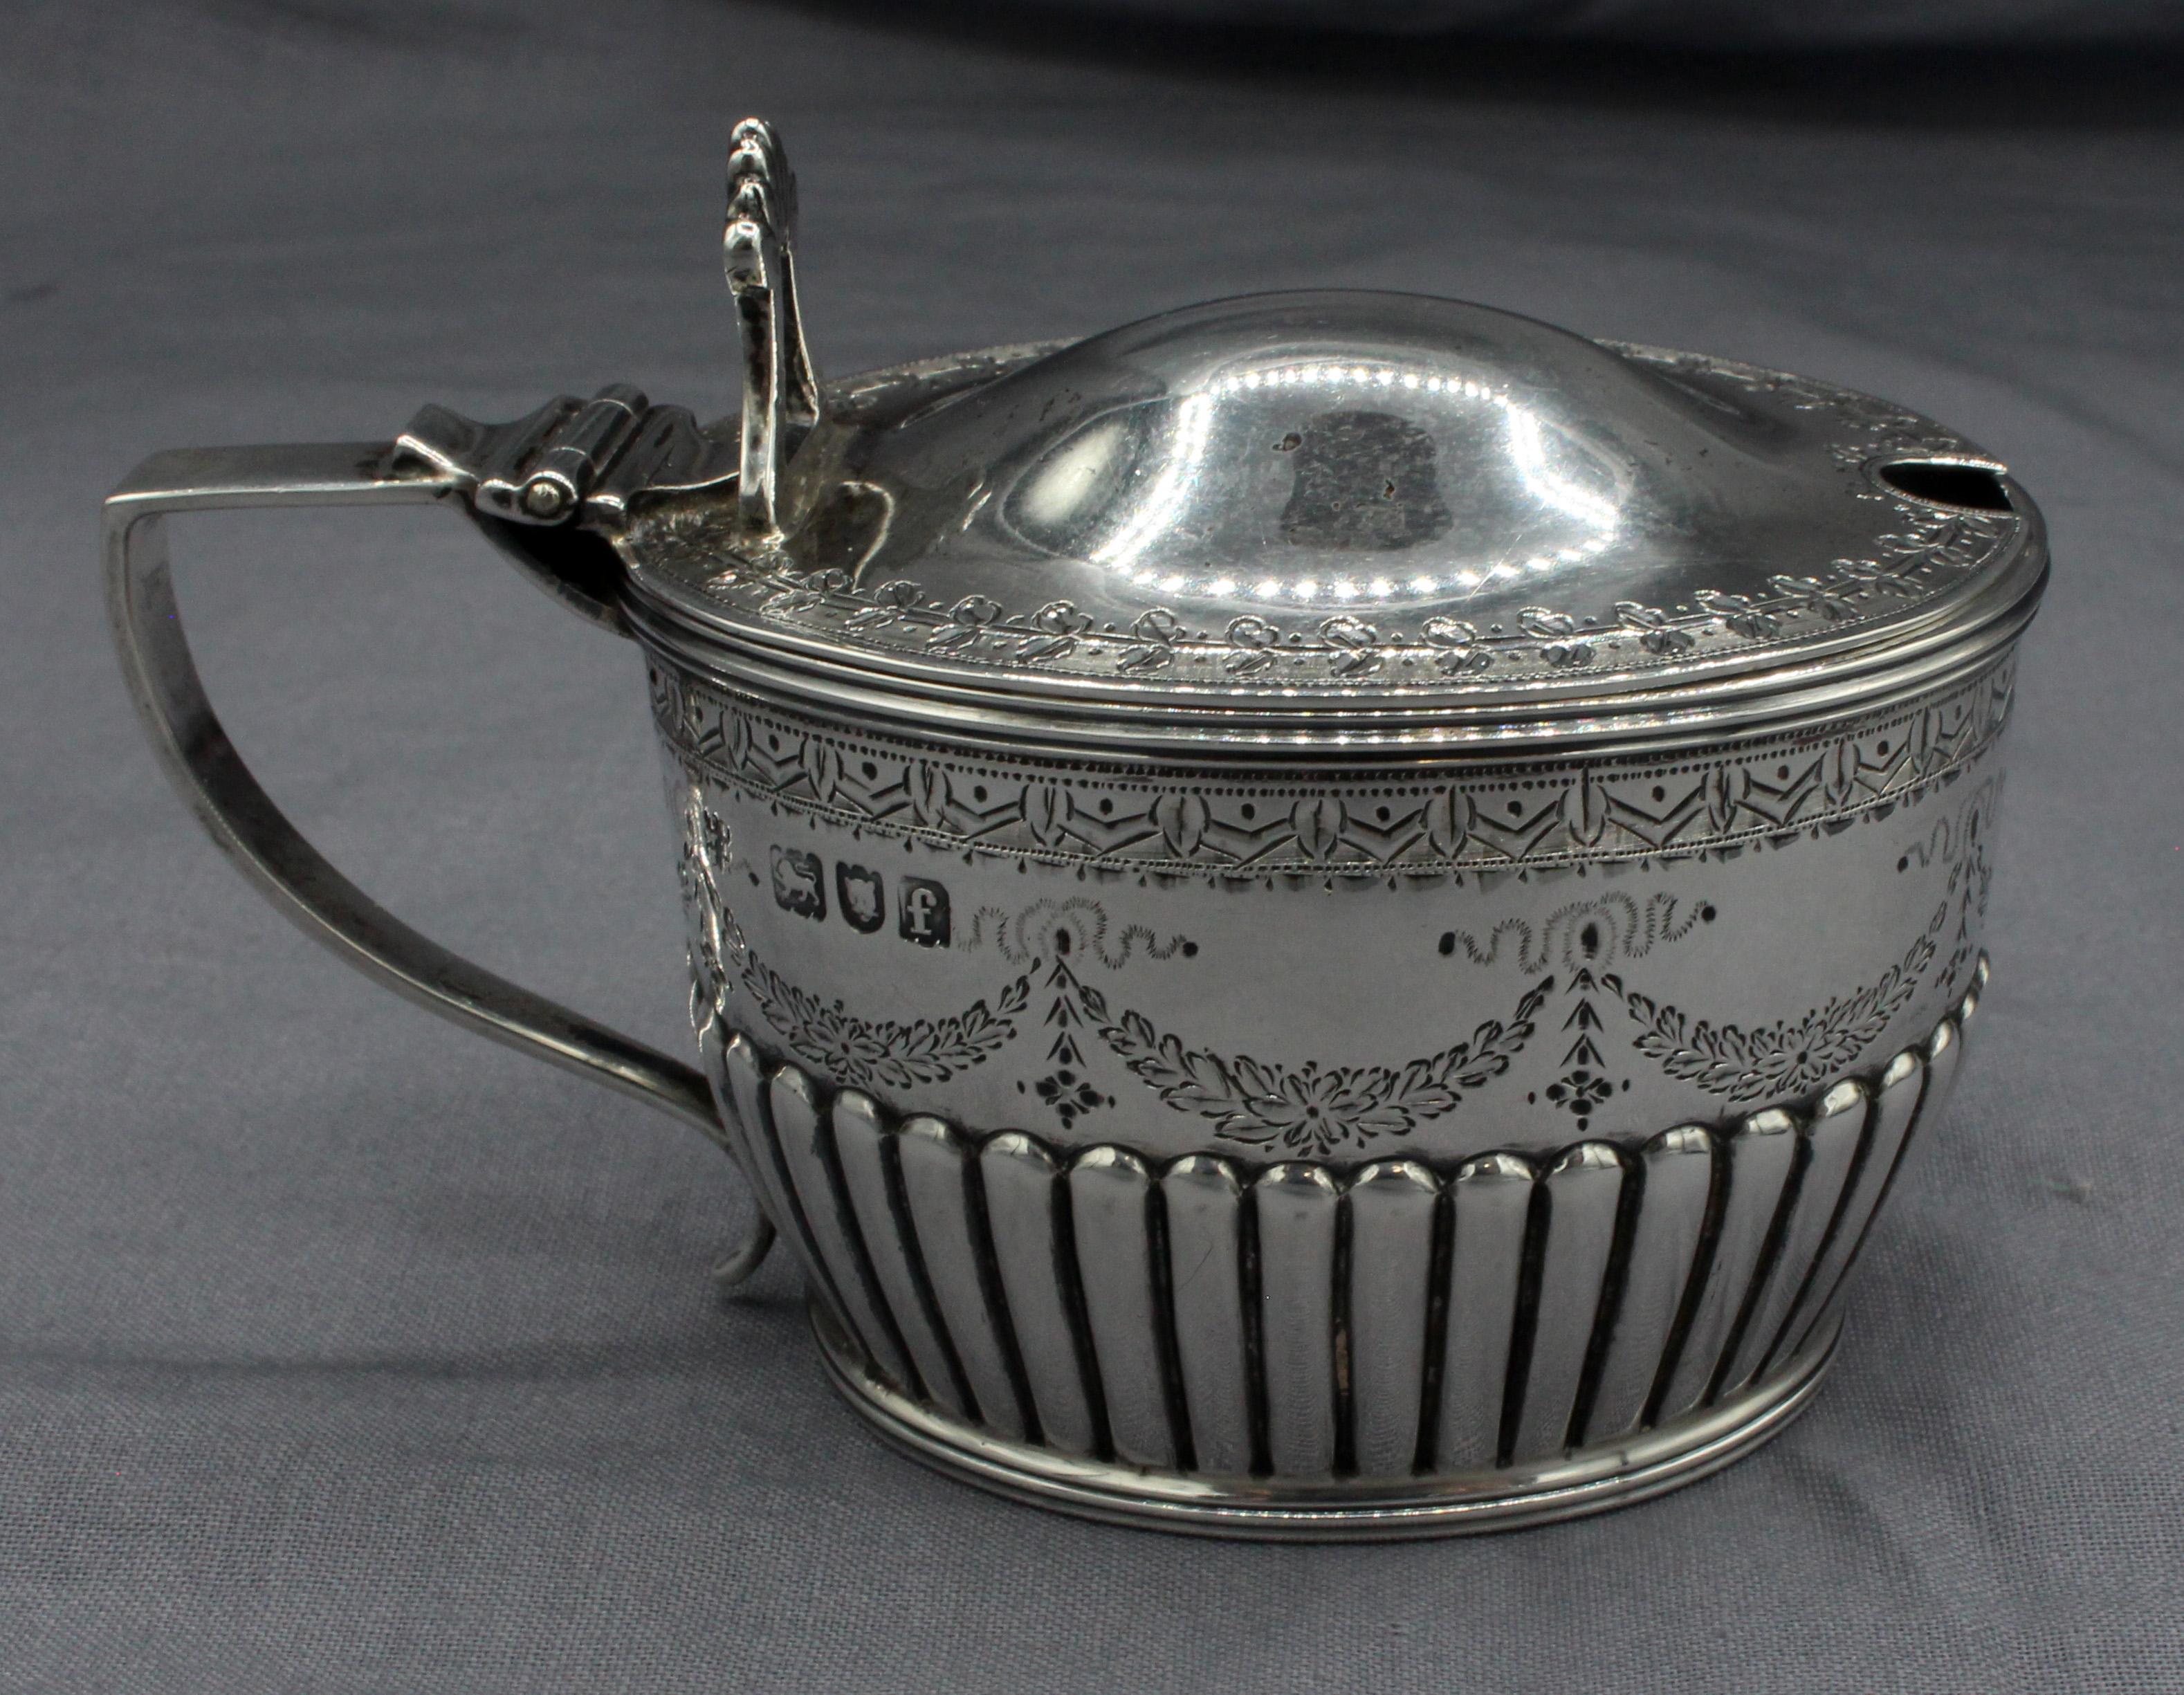 London, 1901, sterling silver mustard pot with cobalt liner. Maker possibly Harrison Brothers. Elegant neoclassical design. 3.10 troy oz. 3 1/4